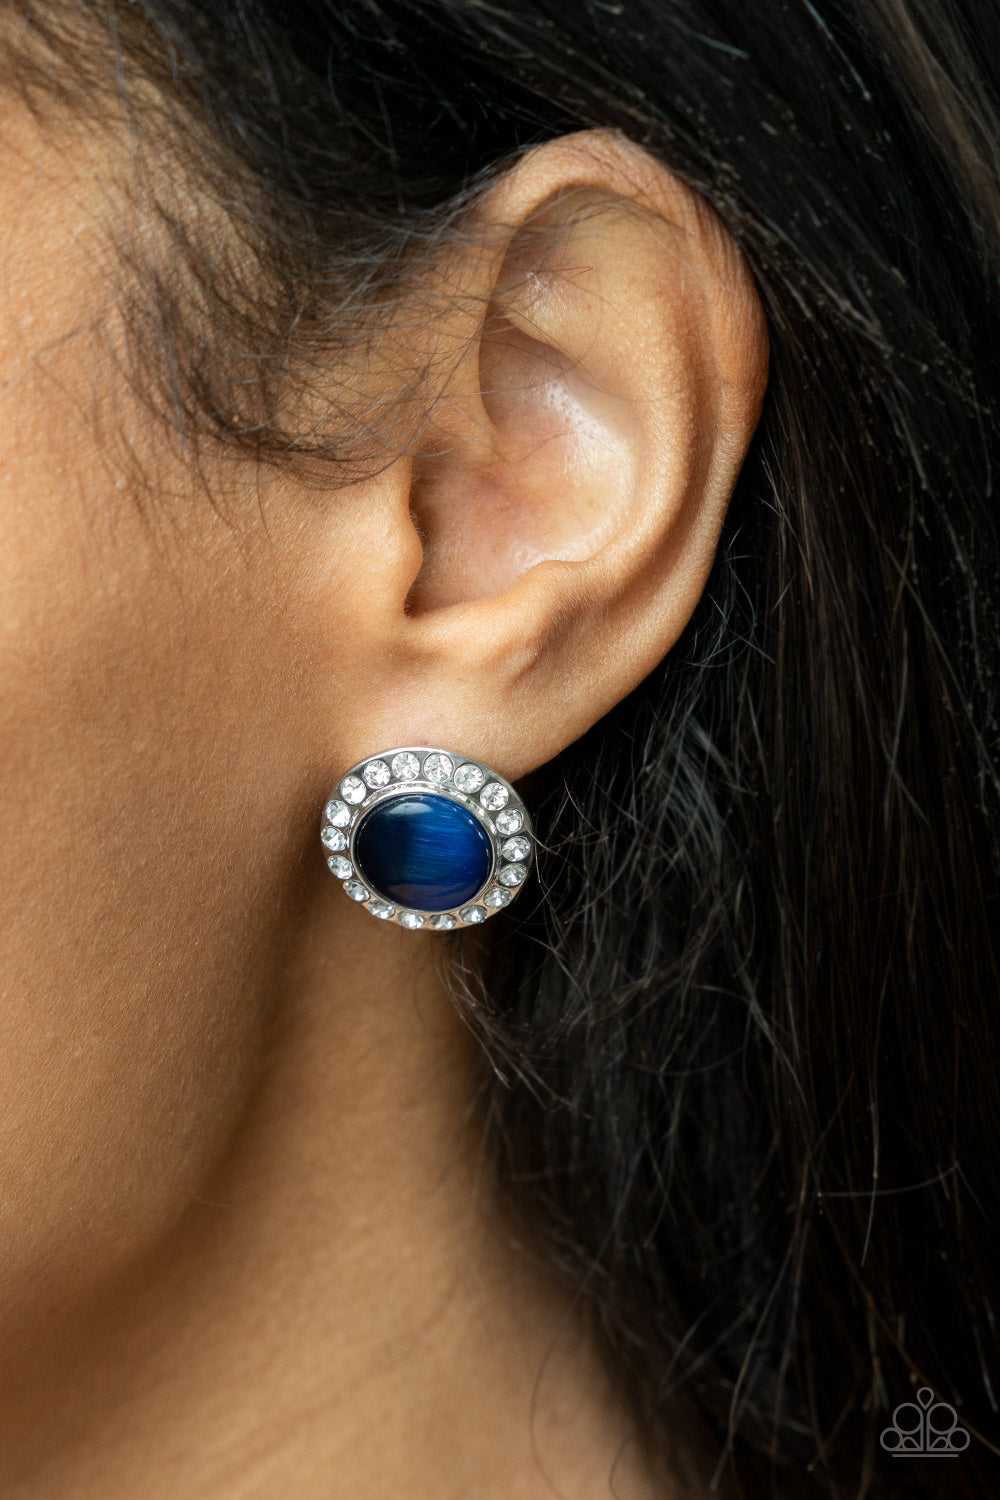 PRE-ORDER - Paparazzi Glowing Dazzle - Blue - Earrings - $5 Jewelry with Ashley Swint